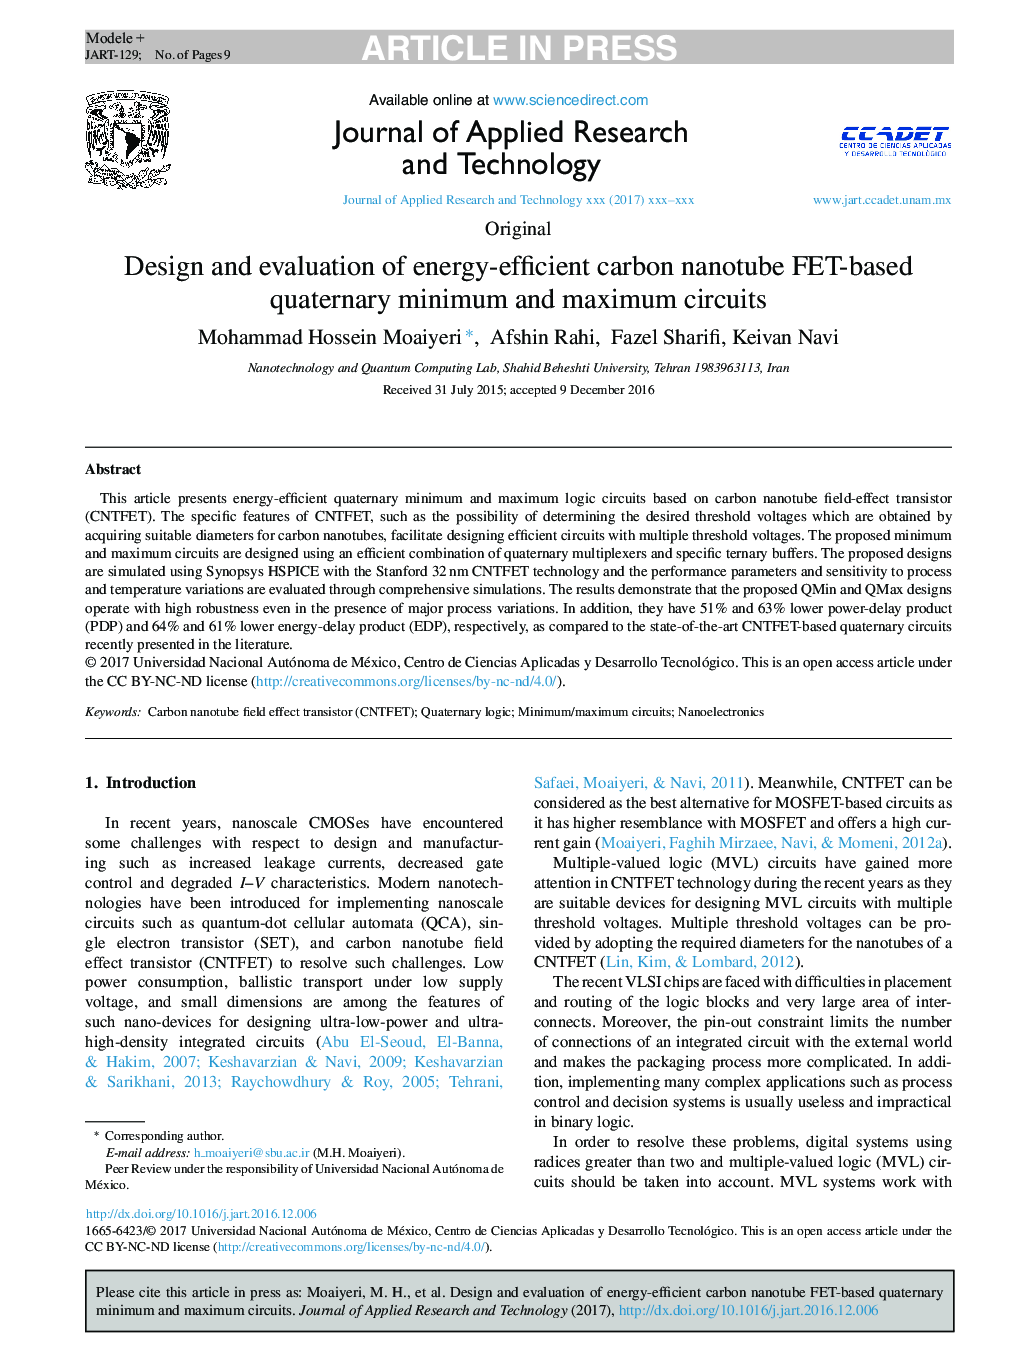 Design and evaluation of energy-efficient carbon nanotube FET-based quaternary minimum and maximum circuits